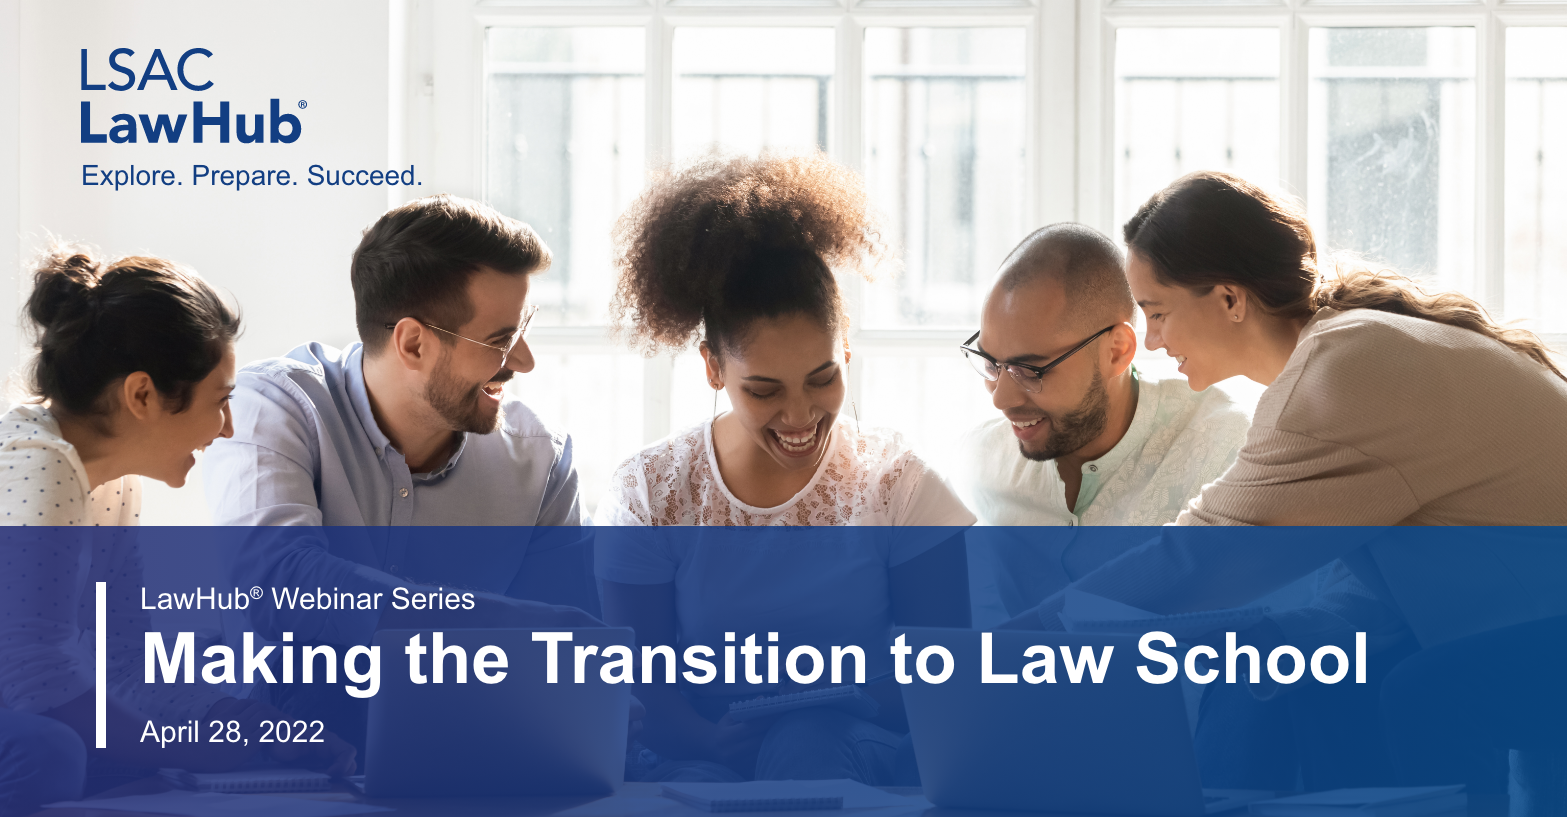 LSAC LawHub Webinar Series - Making the Transition to Law School